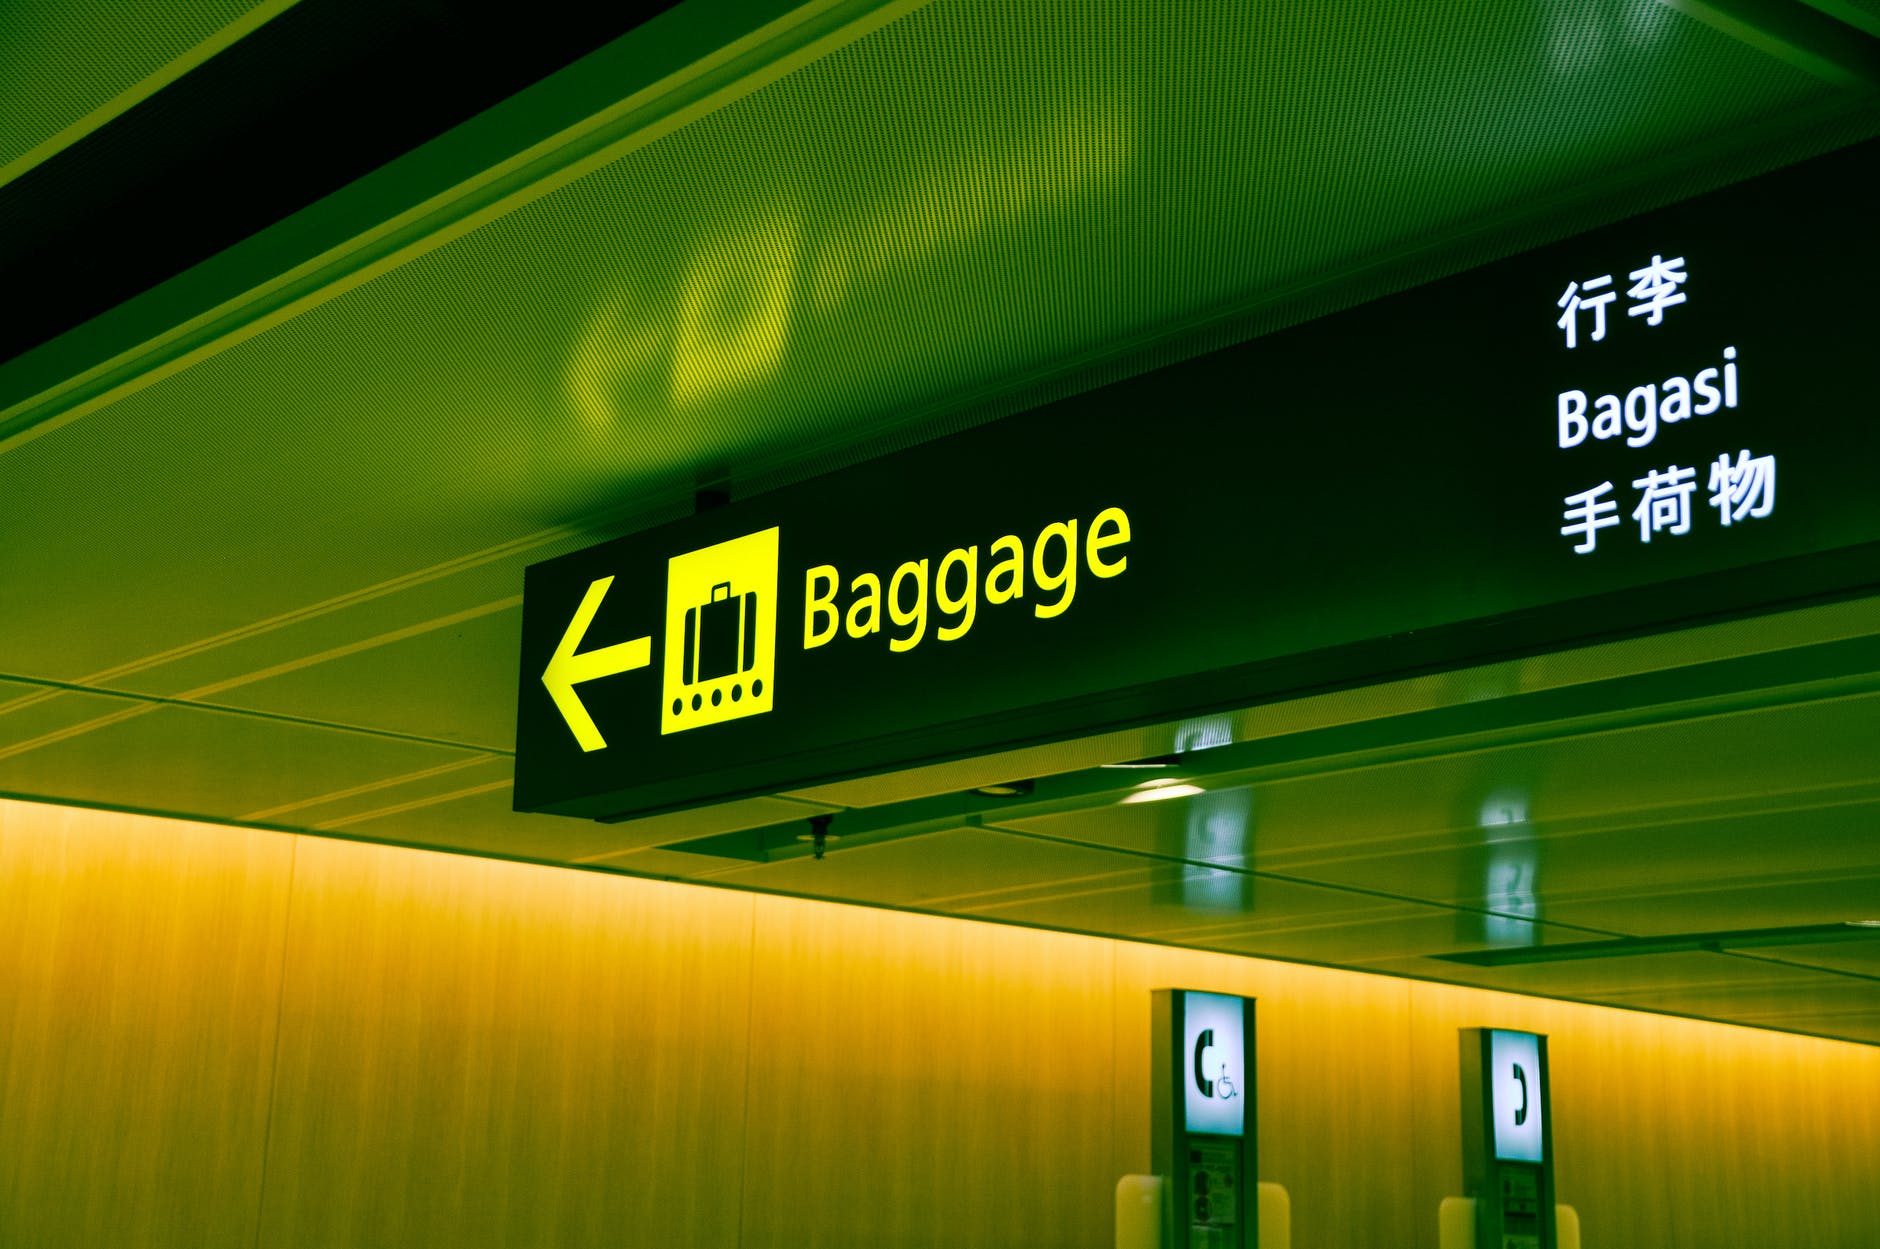 photo of baggage sign at airport